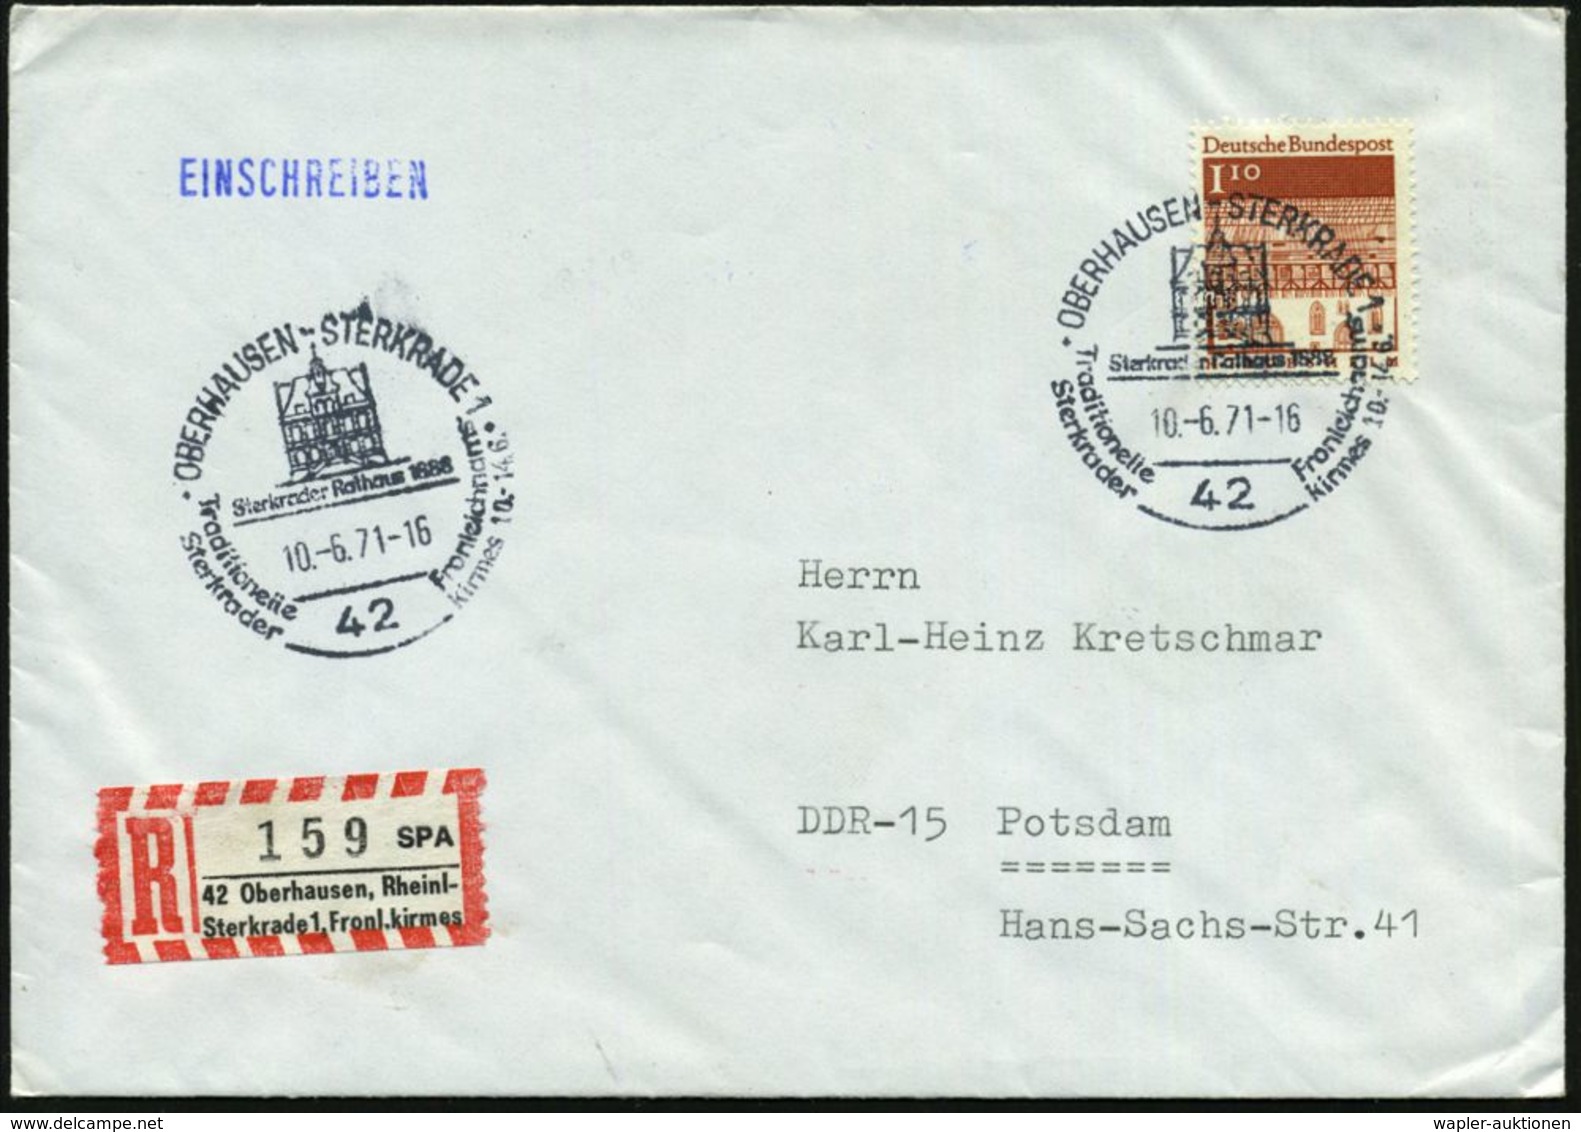 WALLFAHRT / PILGER : 42 OBERHAUSEN-STERKRADE 1/ Fronleichnams-/ Kirmes 1971 (10.6.) SSt + Sonder-RZ: SPA/42 Oberhausen,  - Cristianesimo